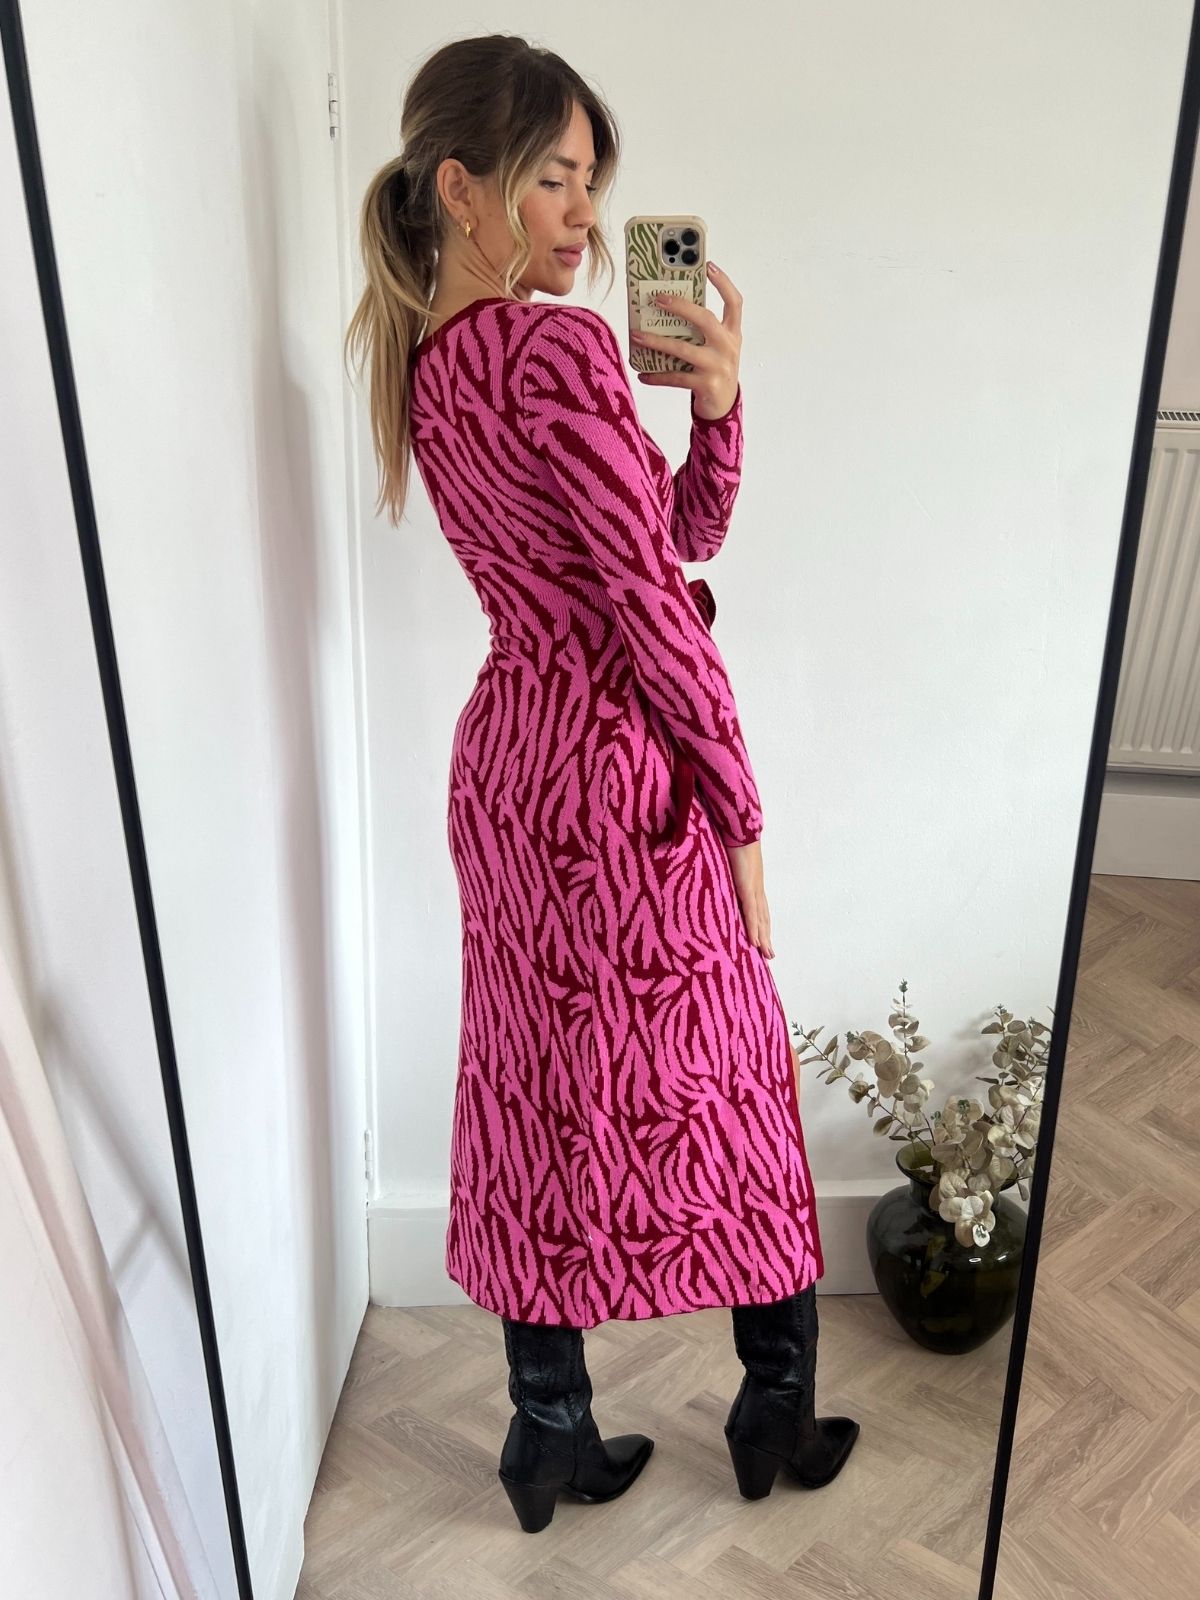 Zebra Knit Dress | Renee Zebra Jacquard Knitted Midaxi Dress in Pink